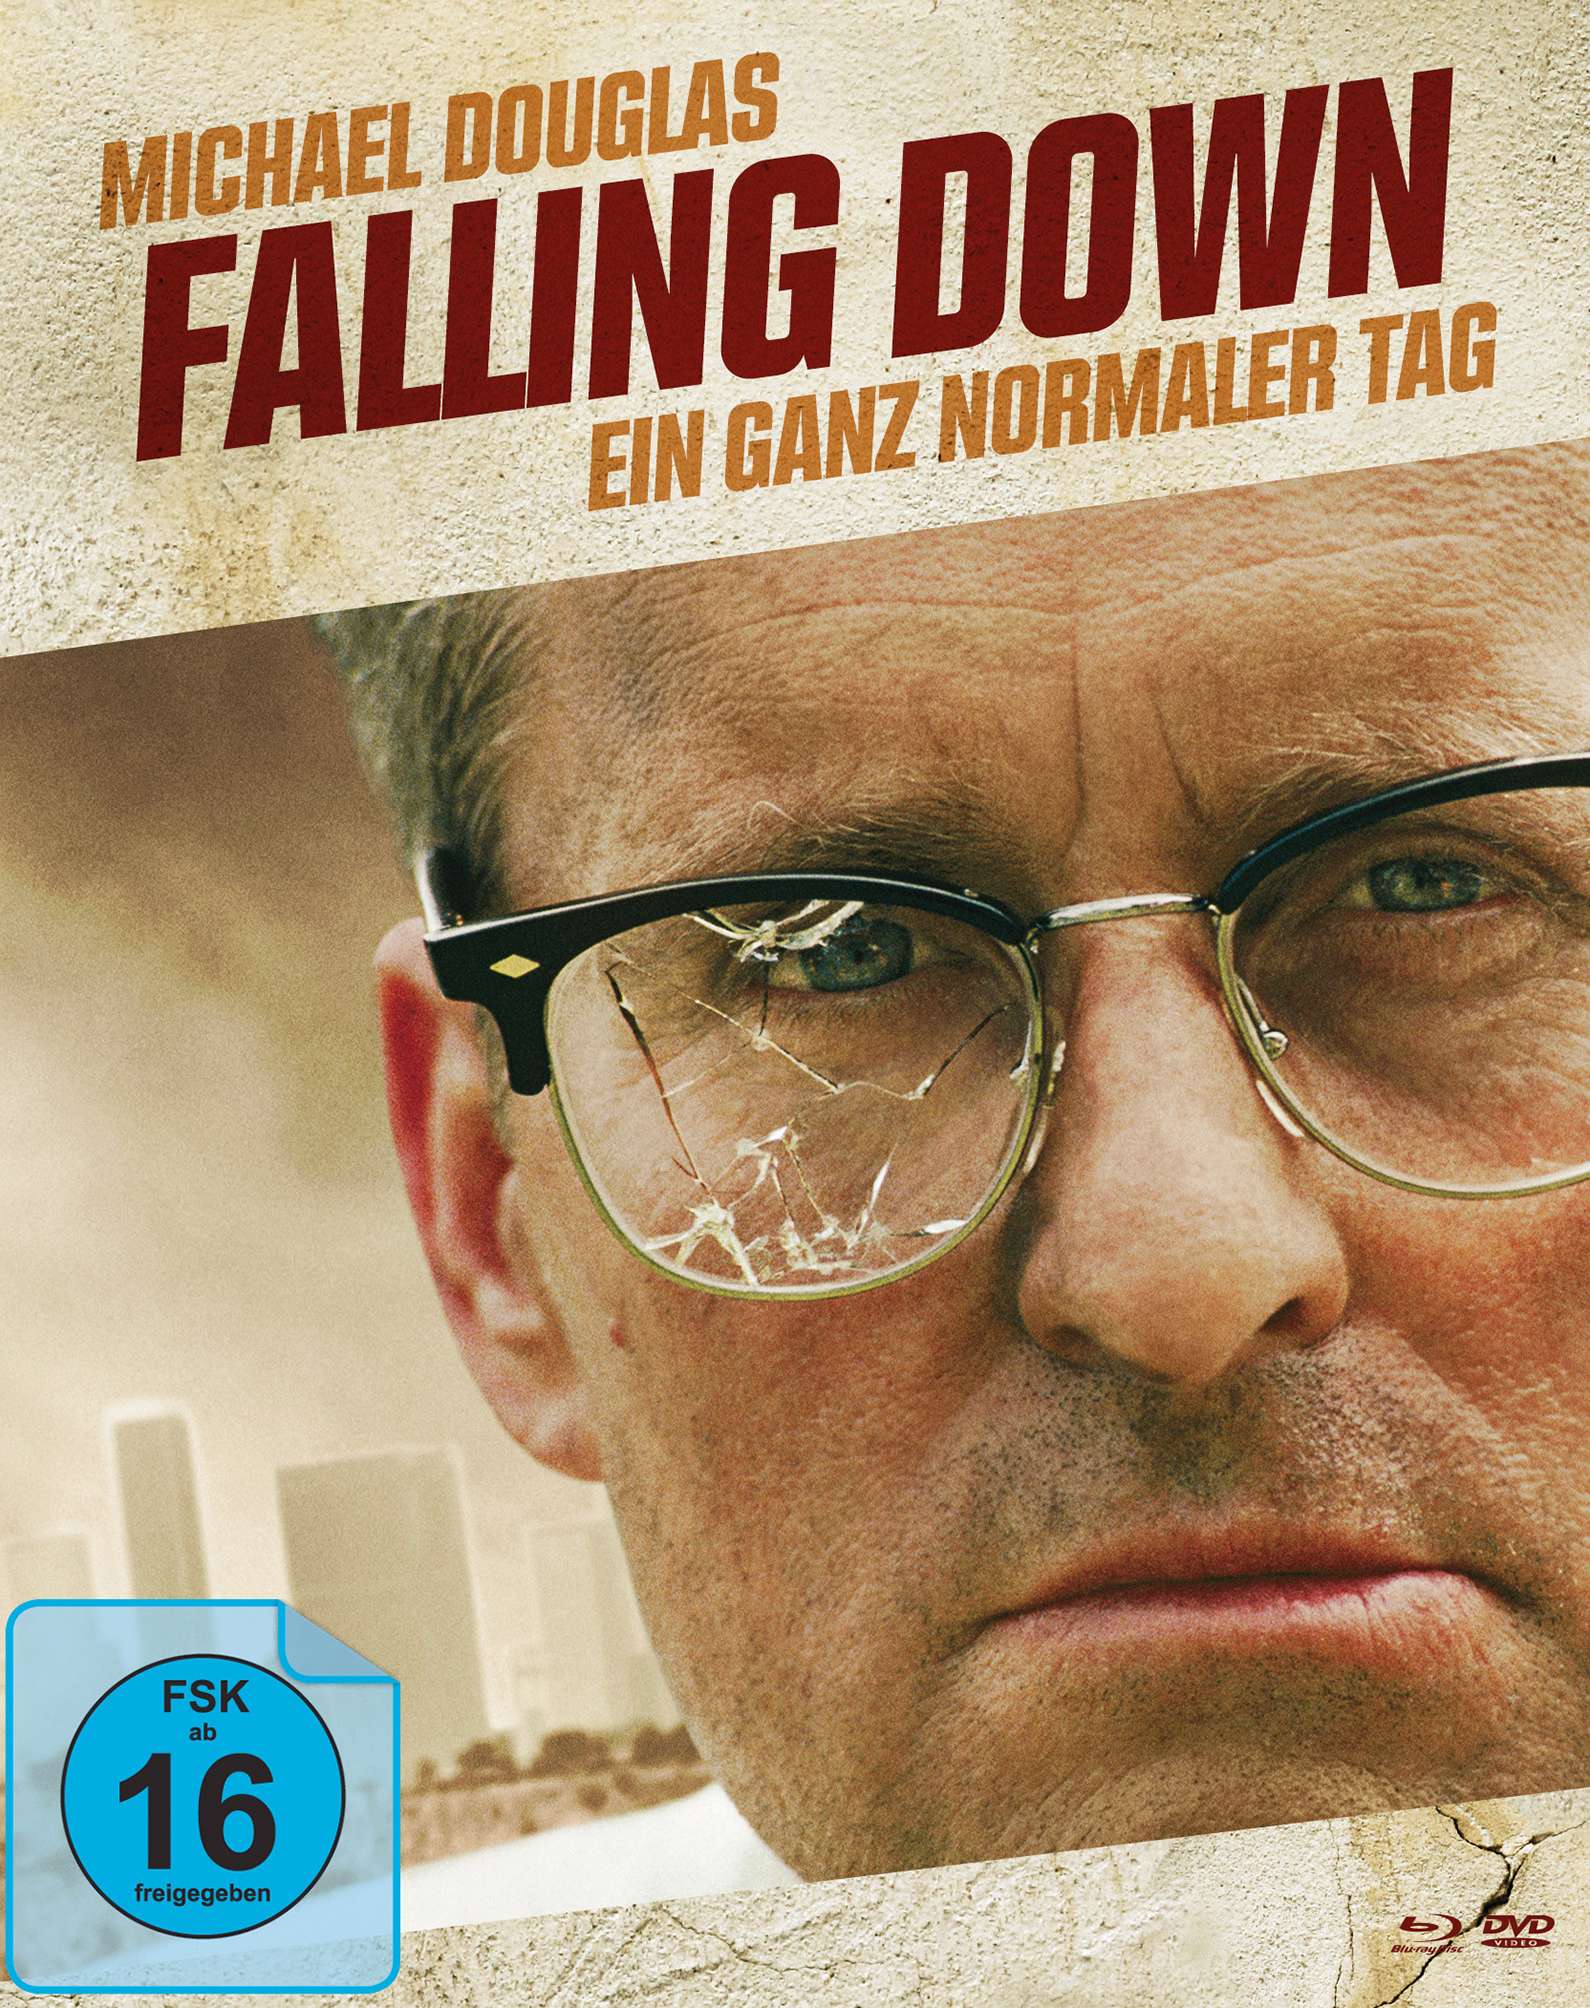 Falling Down - Ein ganz normaler Tag Mediabook Cover B